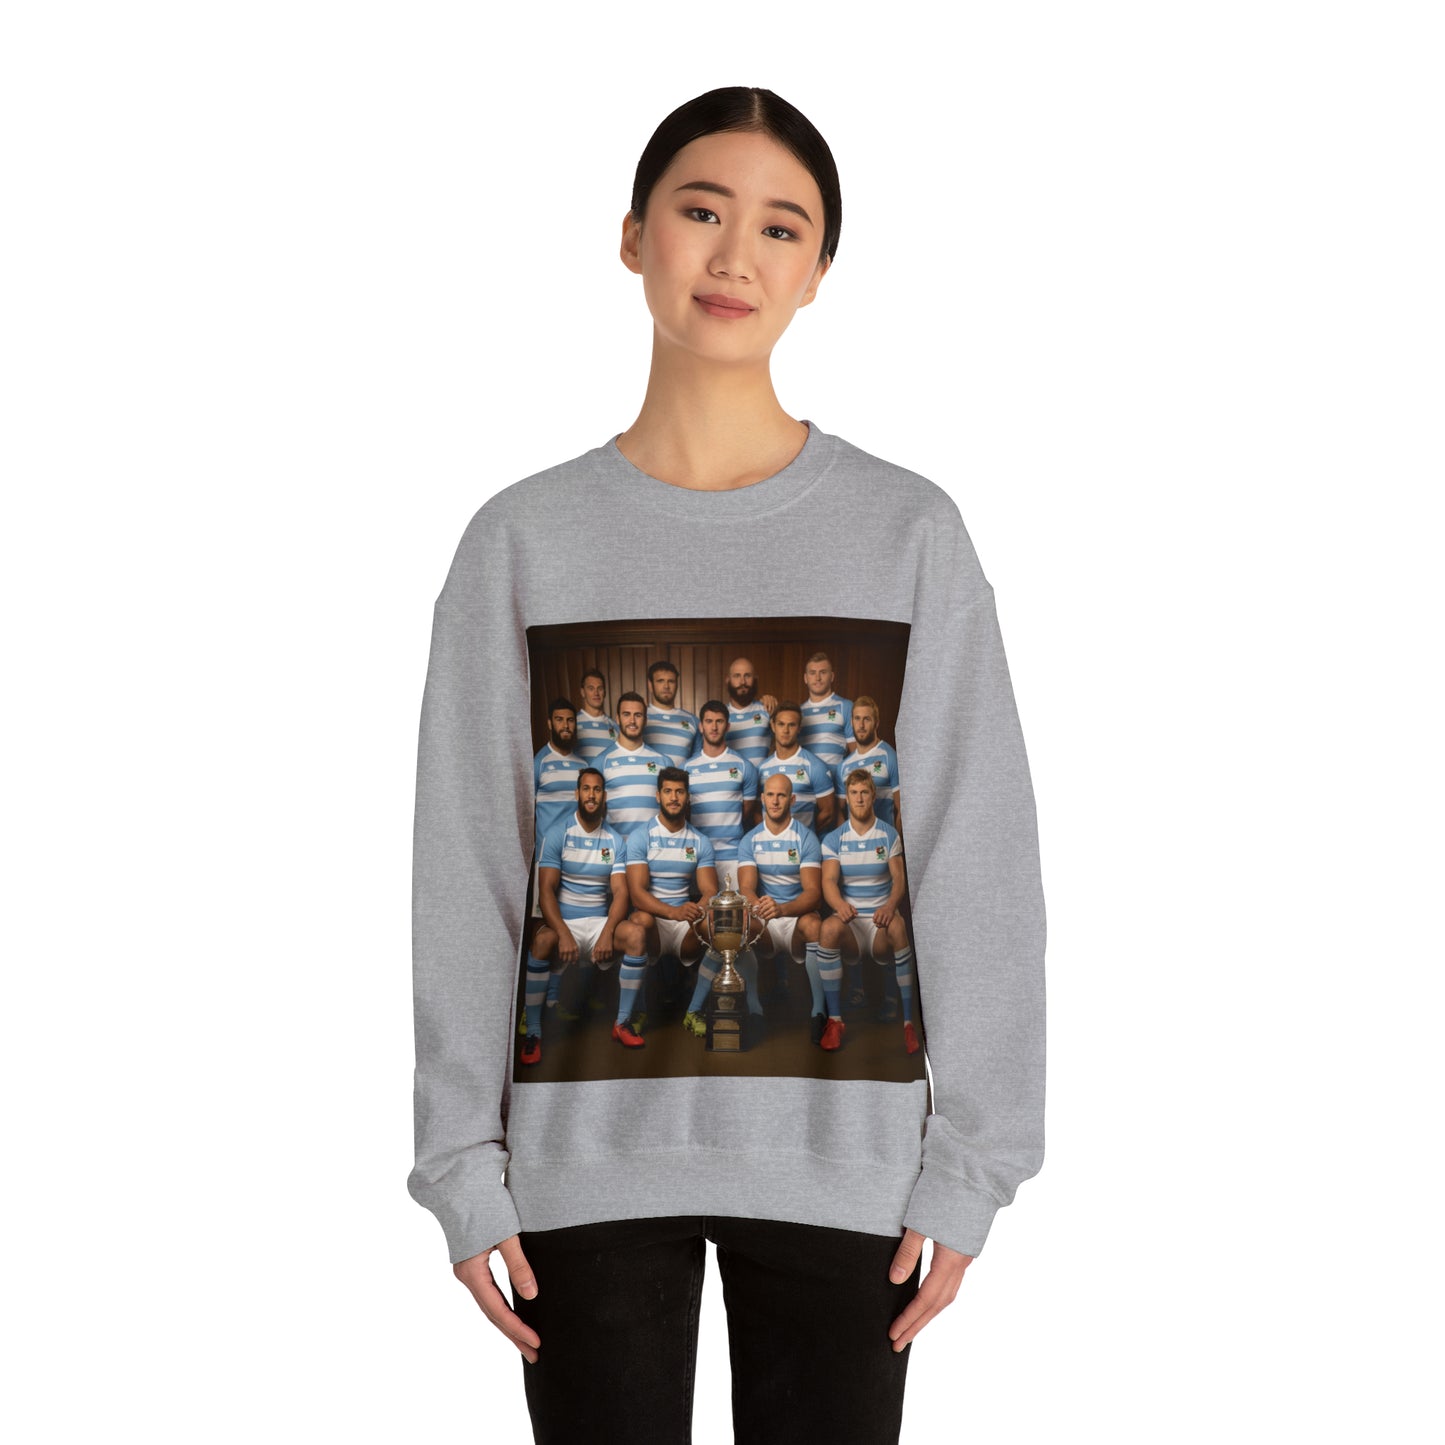 Pumas RWC photoshoot - light sweatshirts